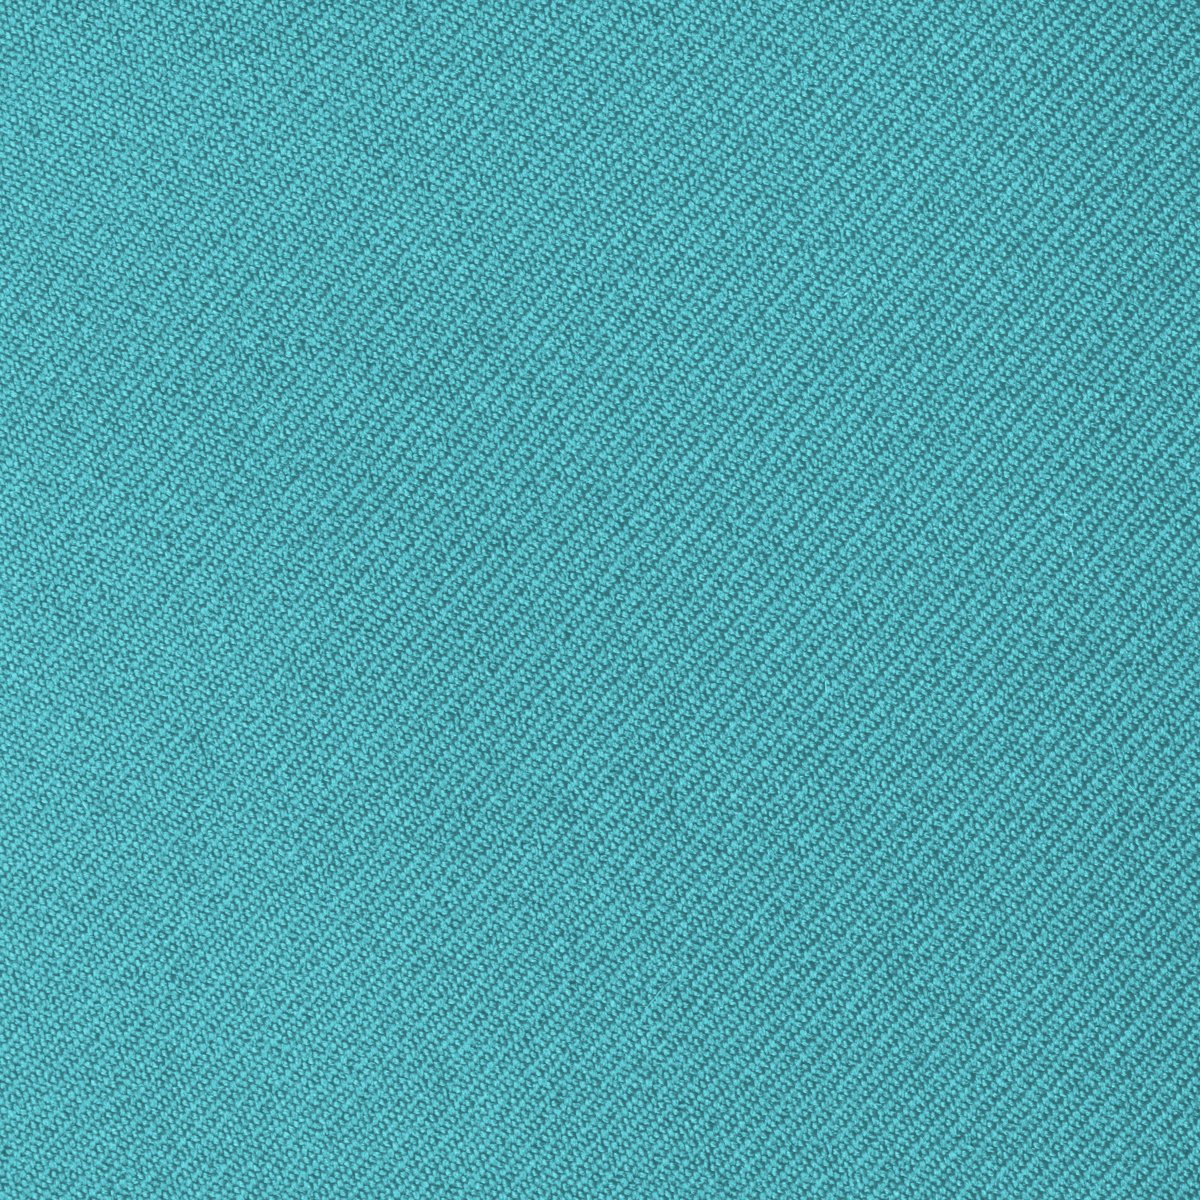 Turquoise Gabardine Fabric | OnlineFabricStore